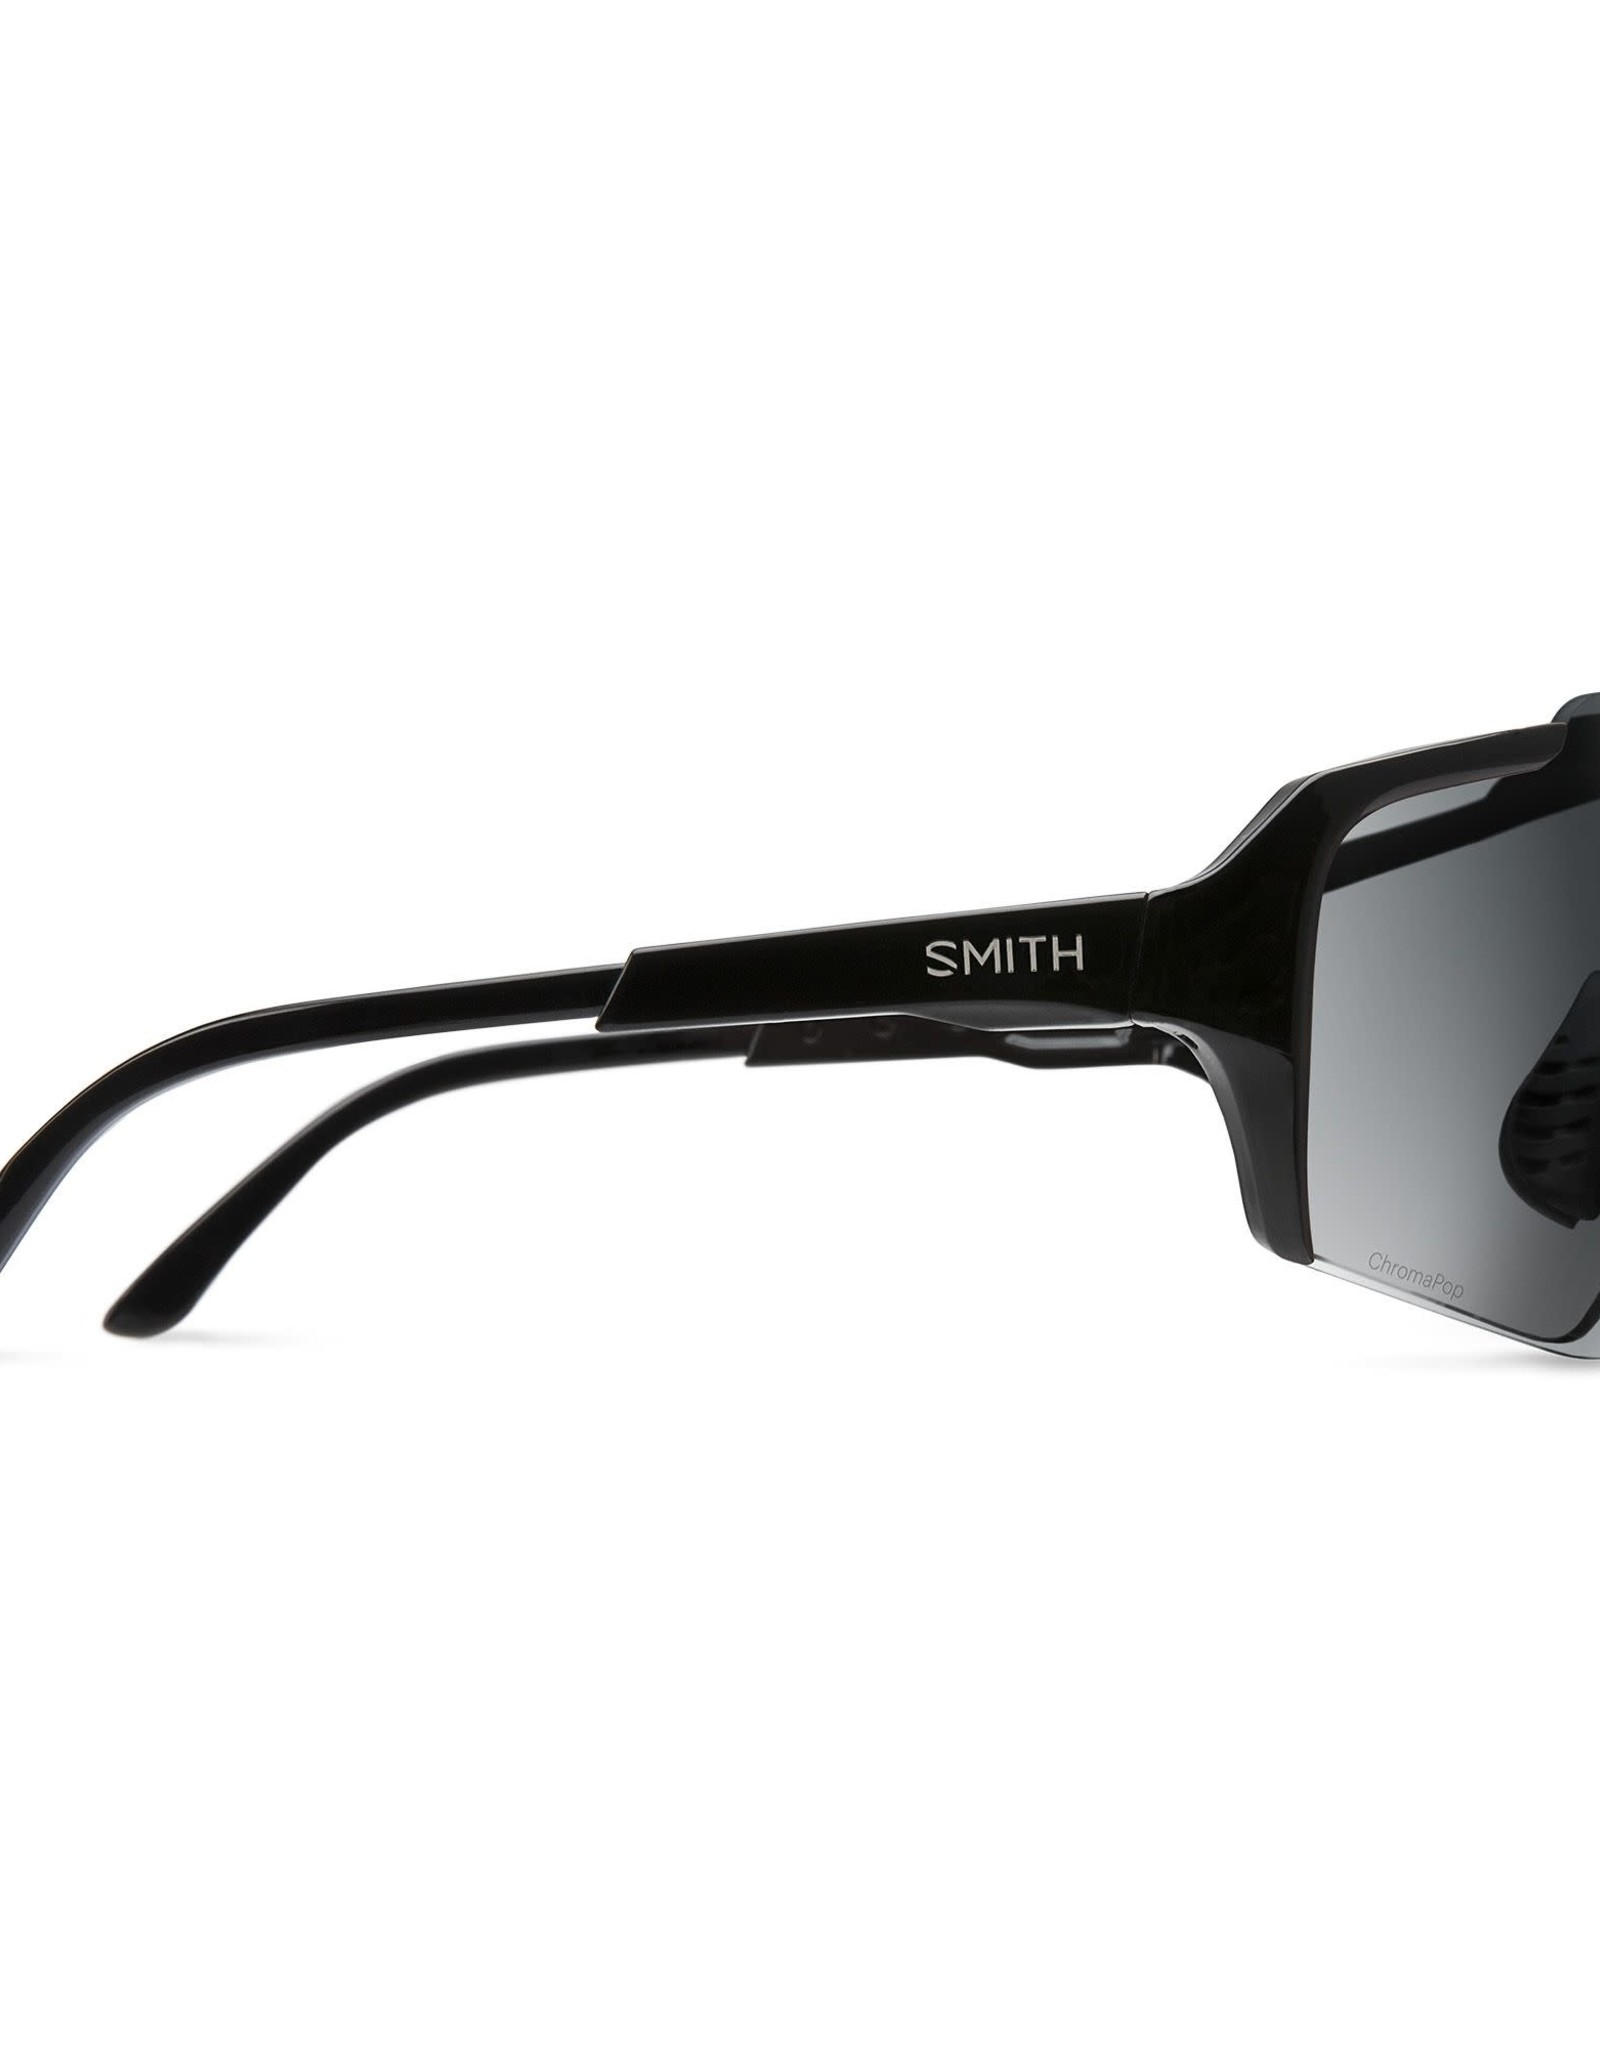 SMITH OPTICS SMITH FLYWHEEL Black Photochromic Clear to Gray